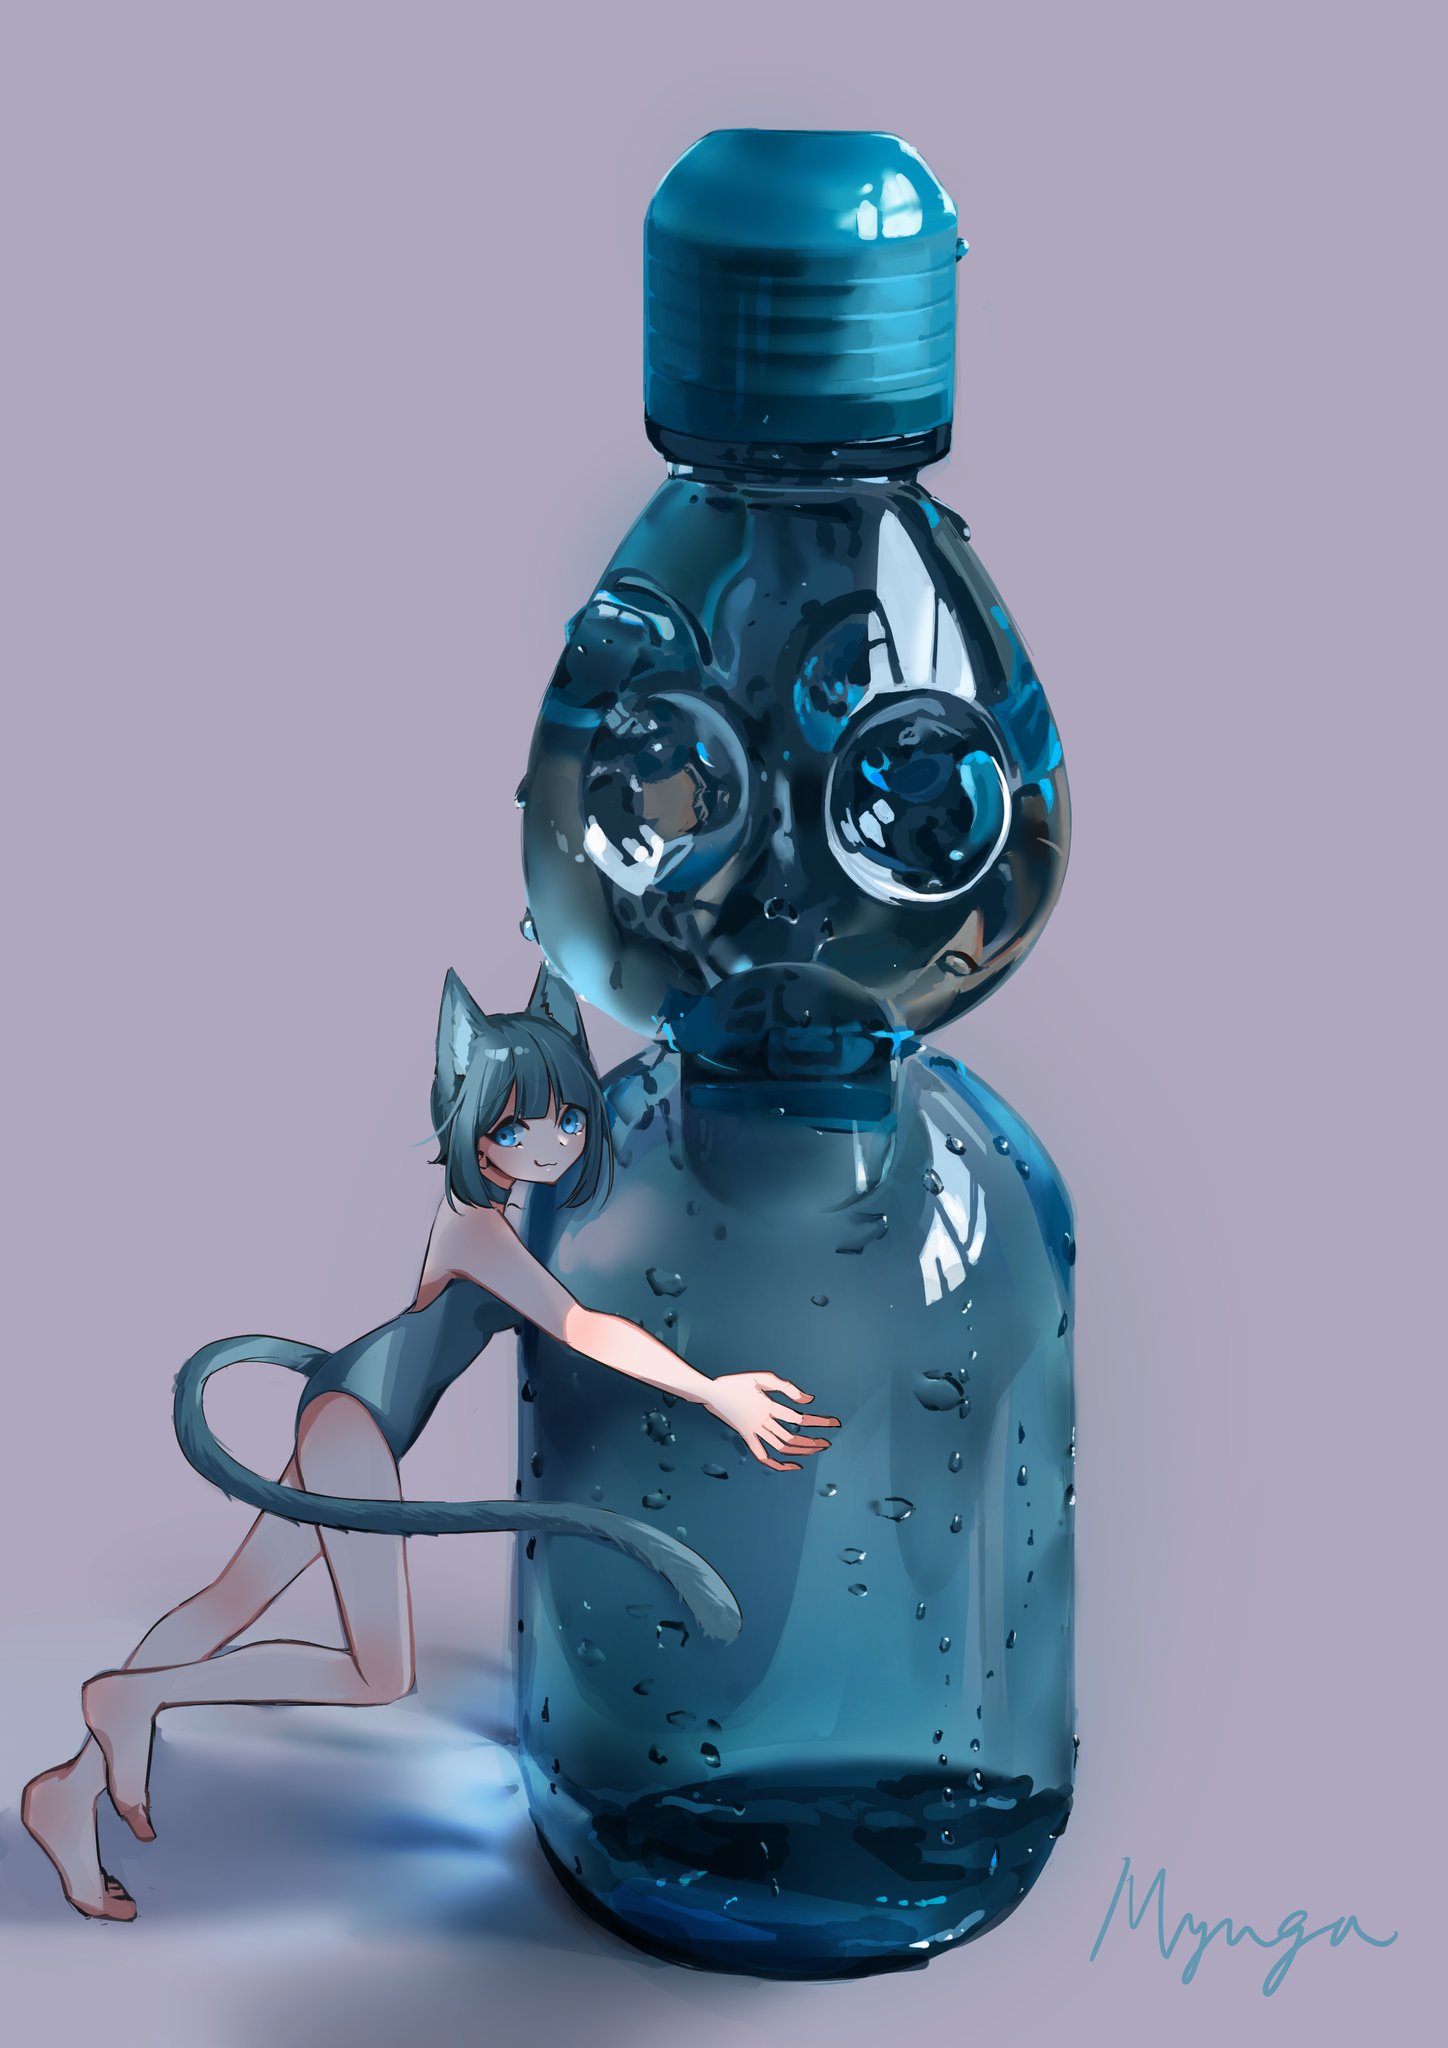 Myuga ラムネ瓶と猫 イラスト T Co 1ni2glfjiu Twitter